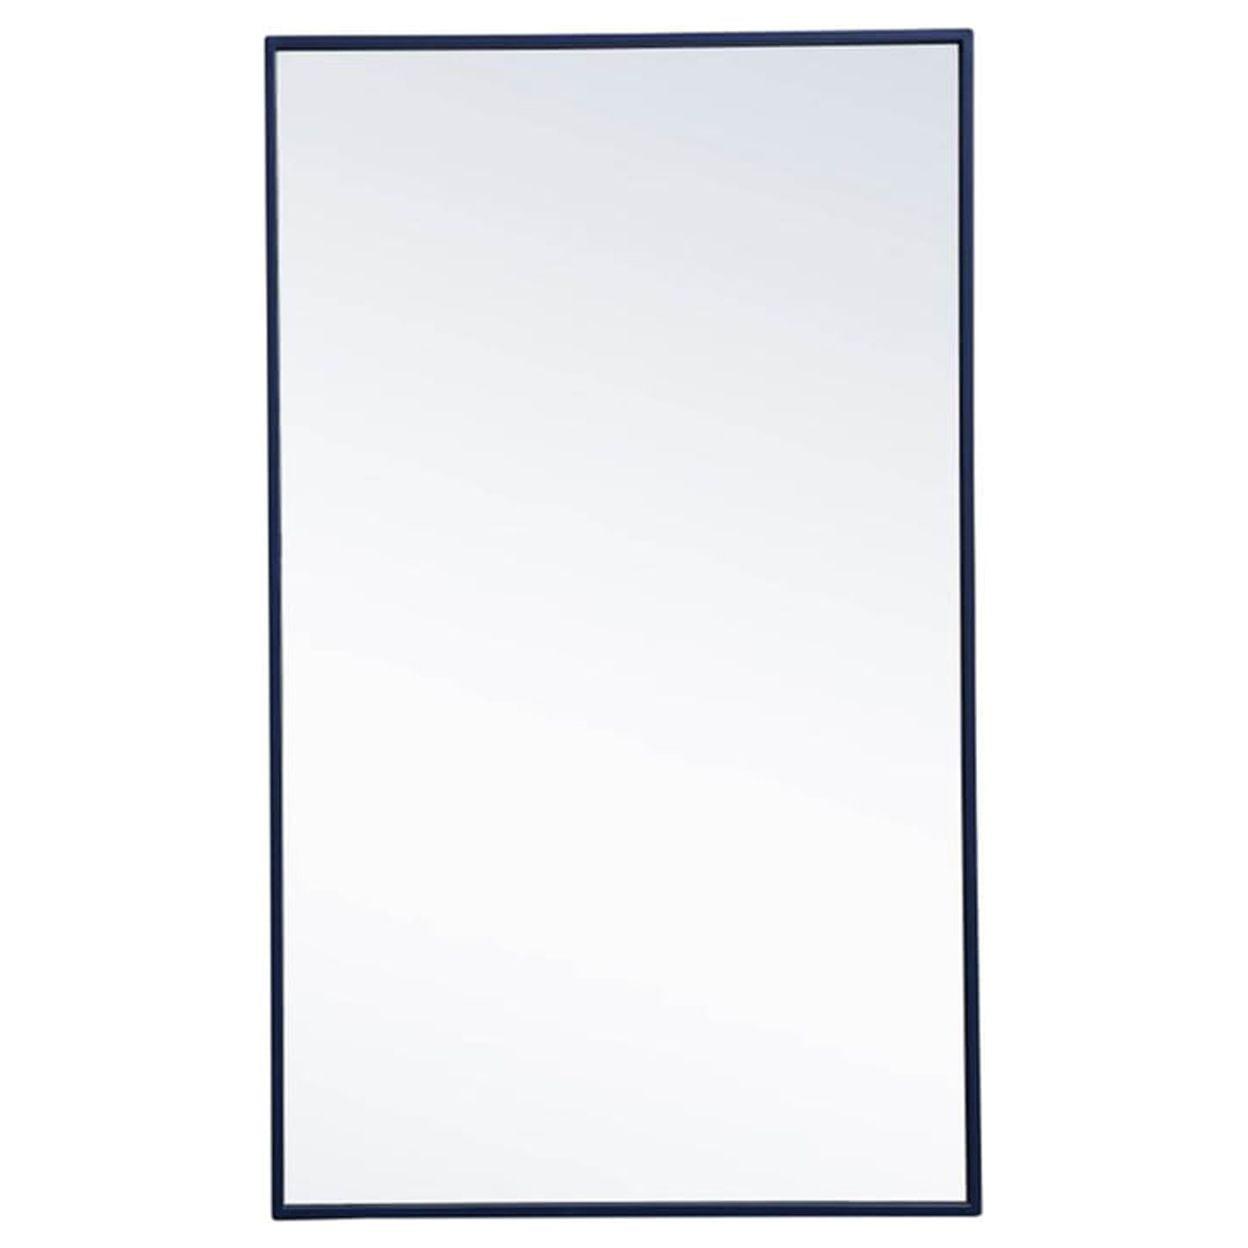 Elegant Contemporary Blue Wood Frame Rectangular Wall Mirror 24x40 in.